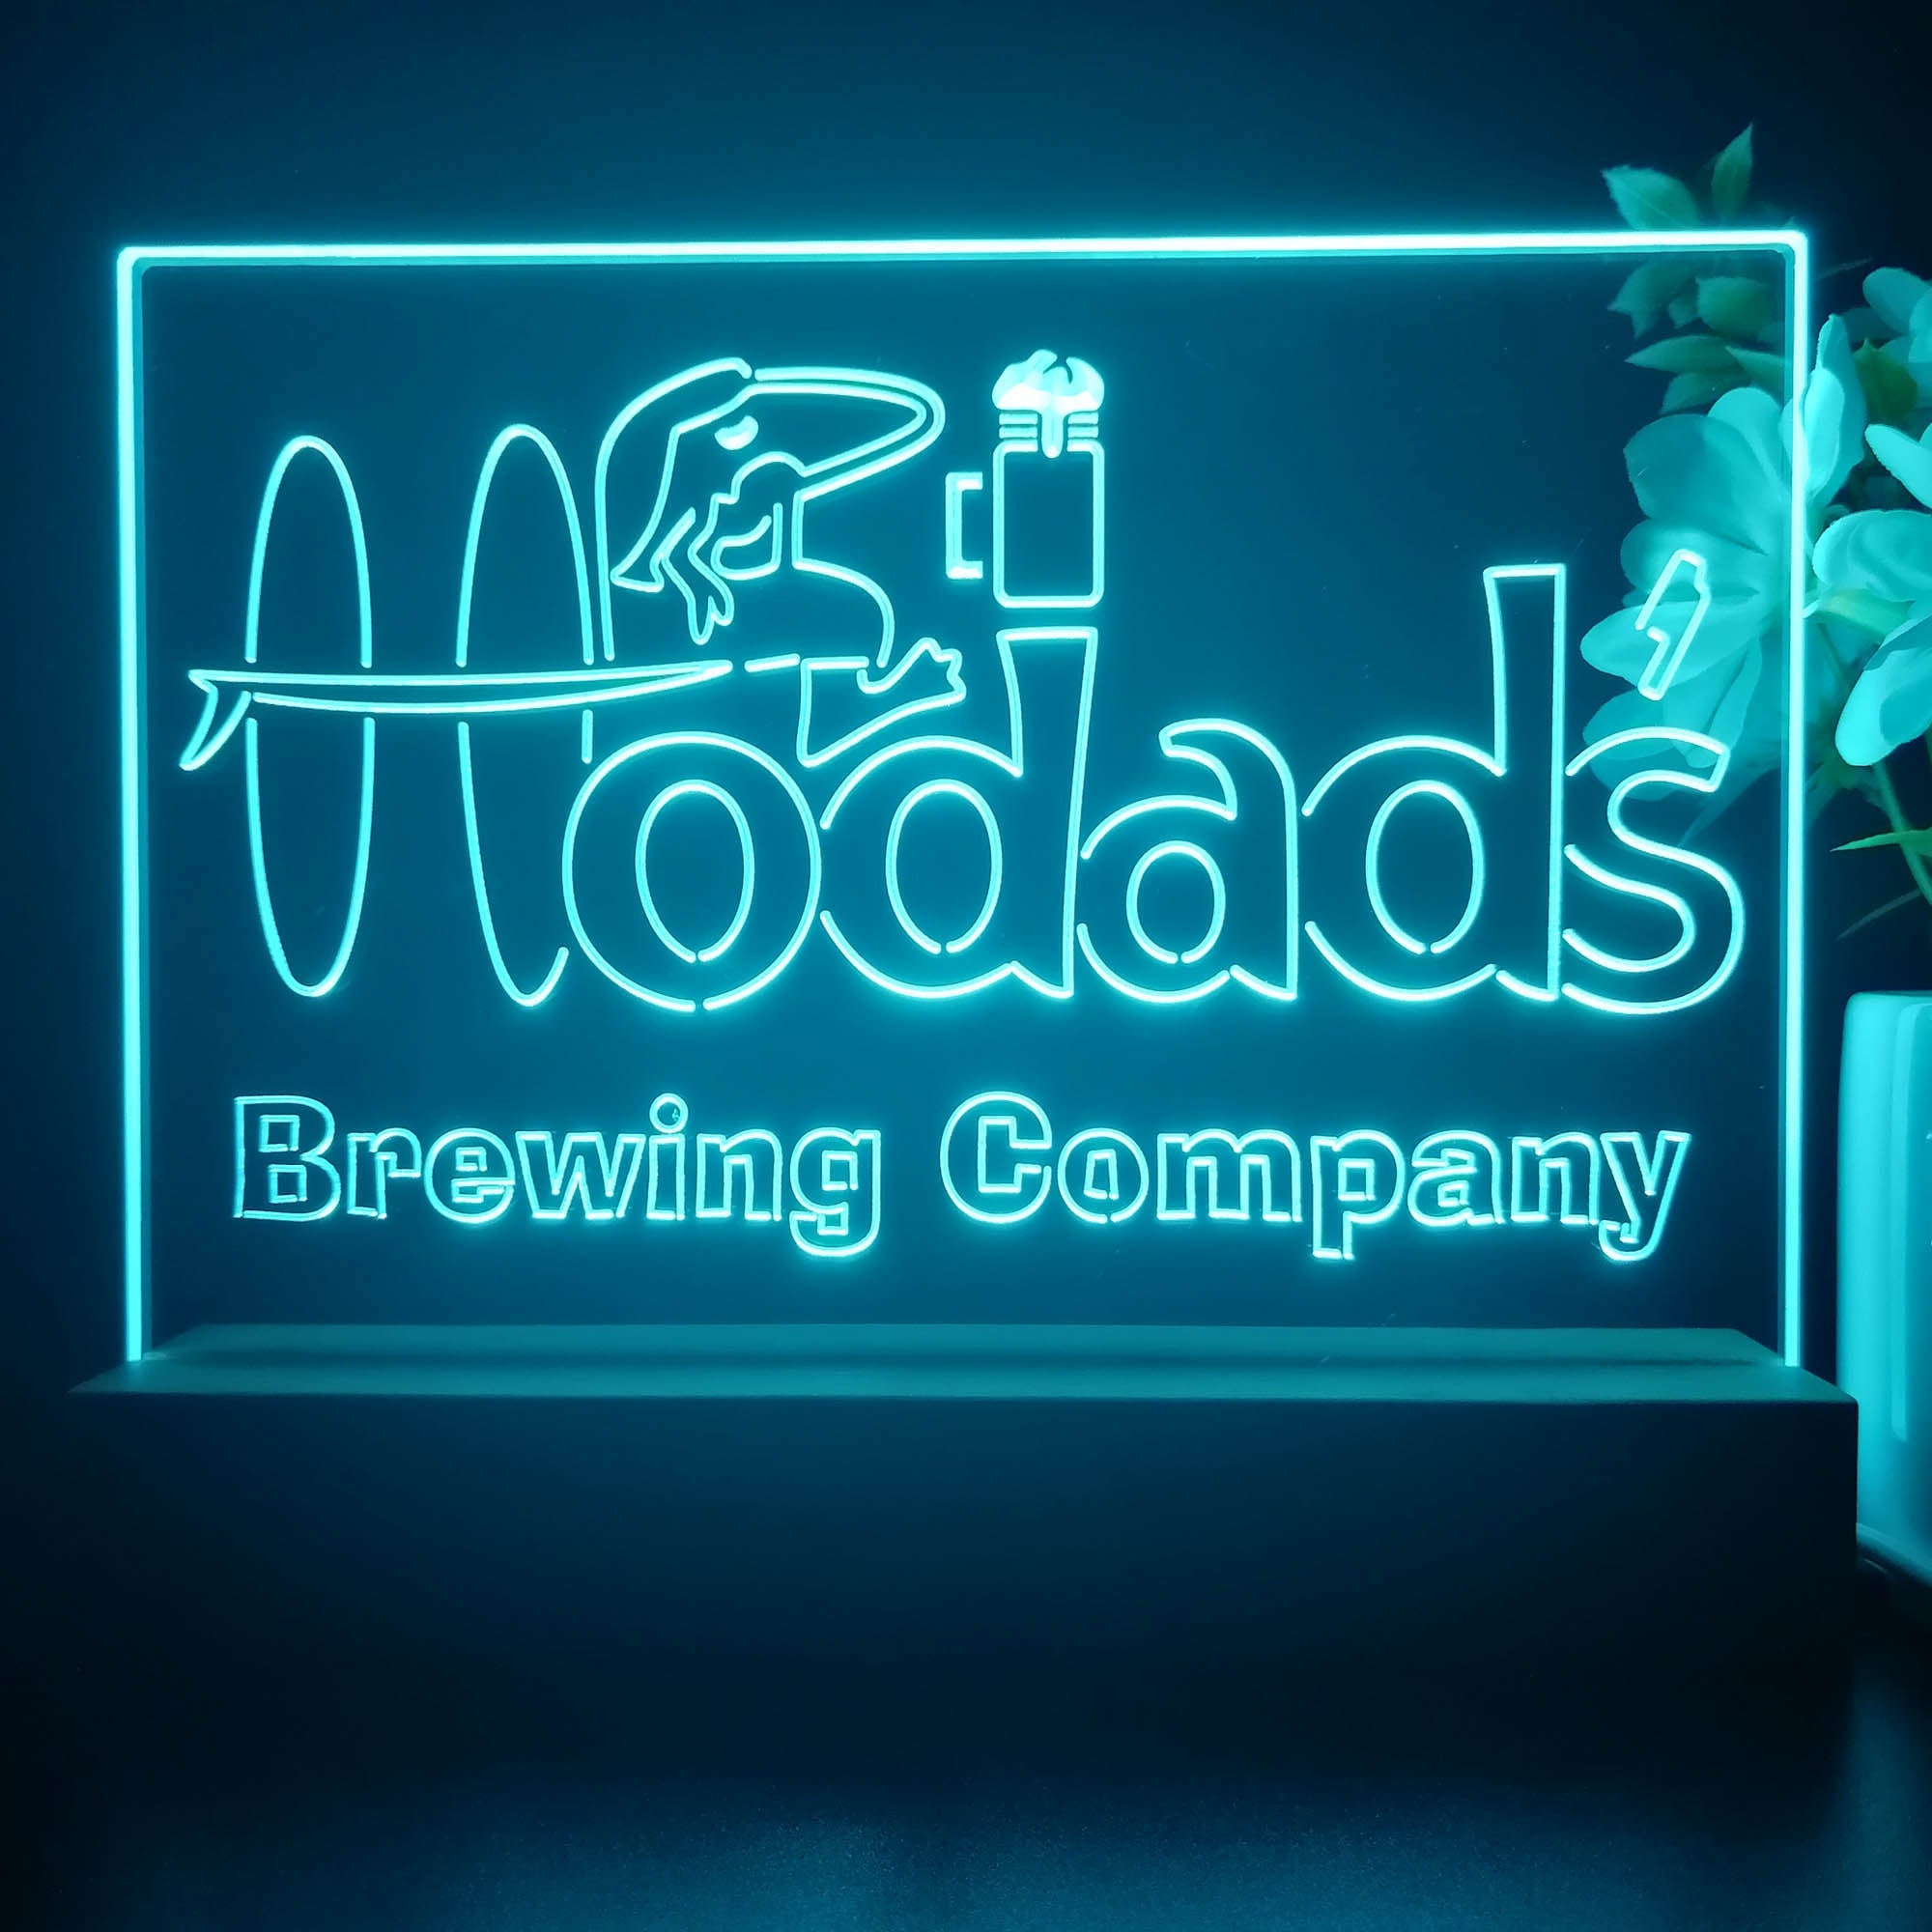 Hodad's Brewing Co. Neon Sign Pub Bar Decor Lamp